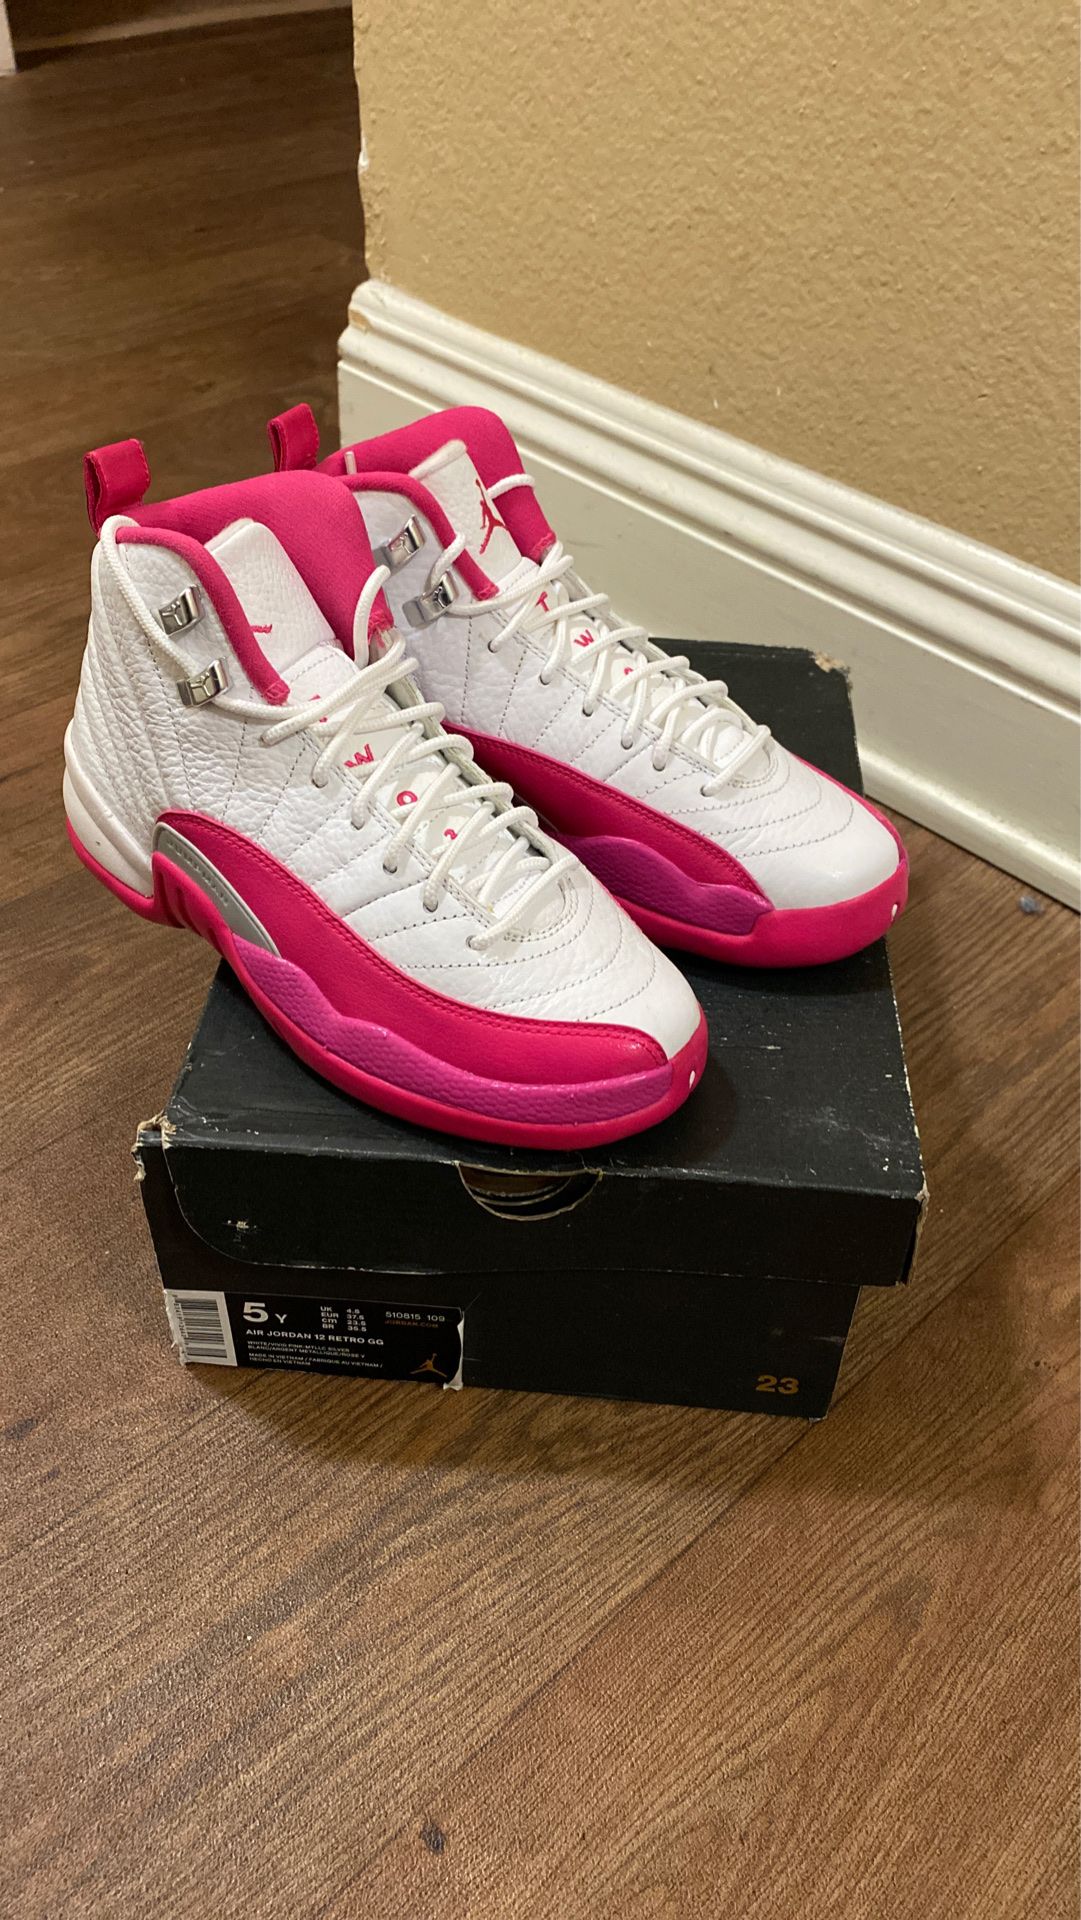 Air Jordan retros 12 white and pink valentine size 5